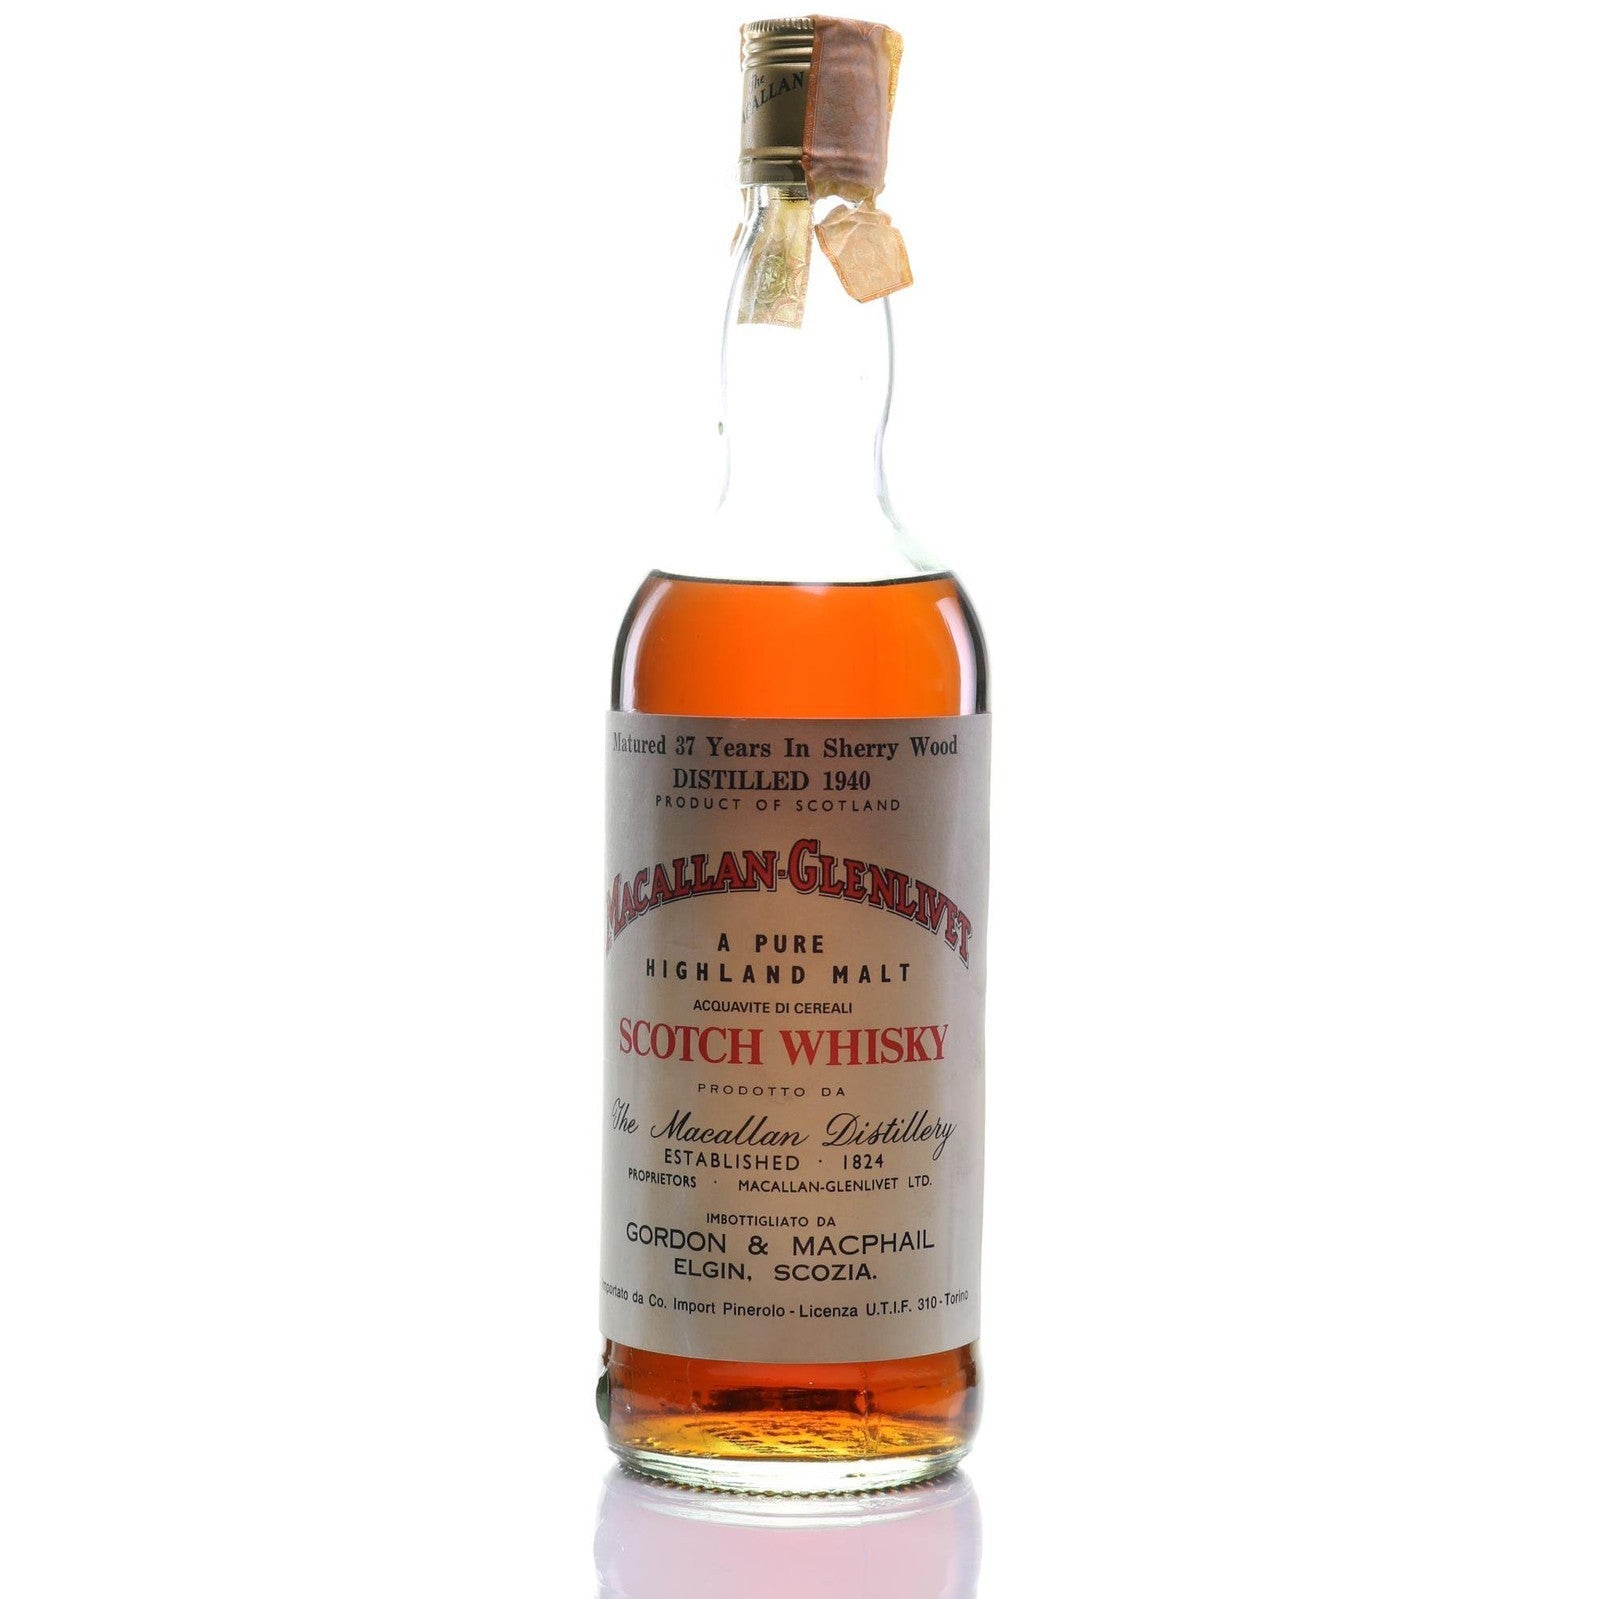 Whisky 1940 Macallan Glenlivet Gordon & MacPhail, 37 Year Old, Speysid - 4498842105971